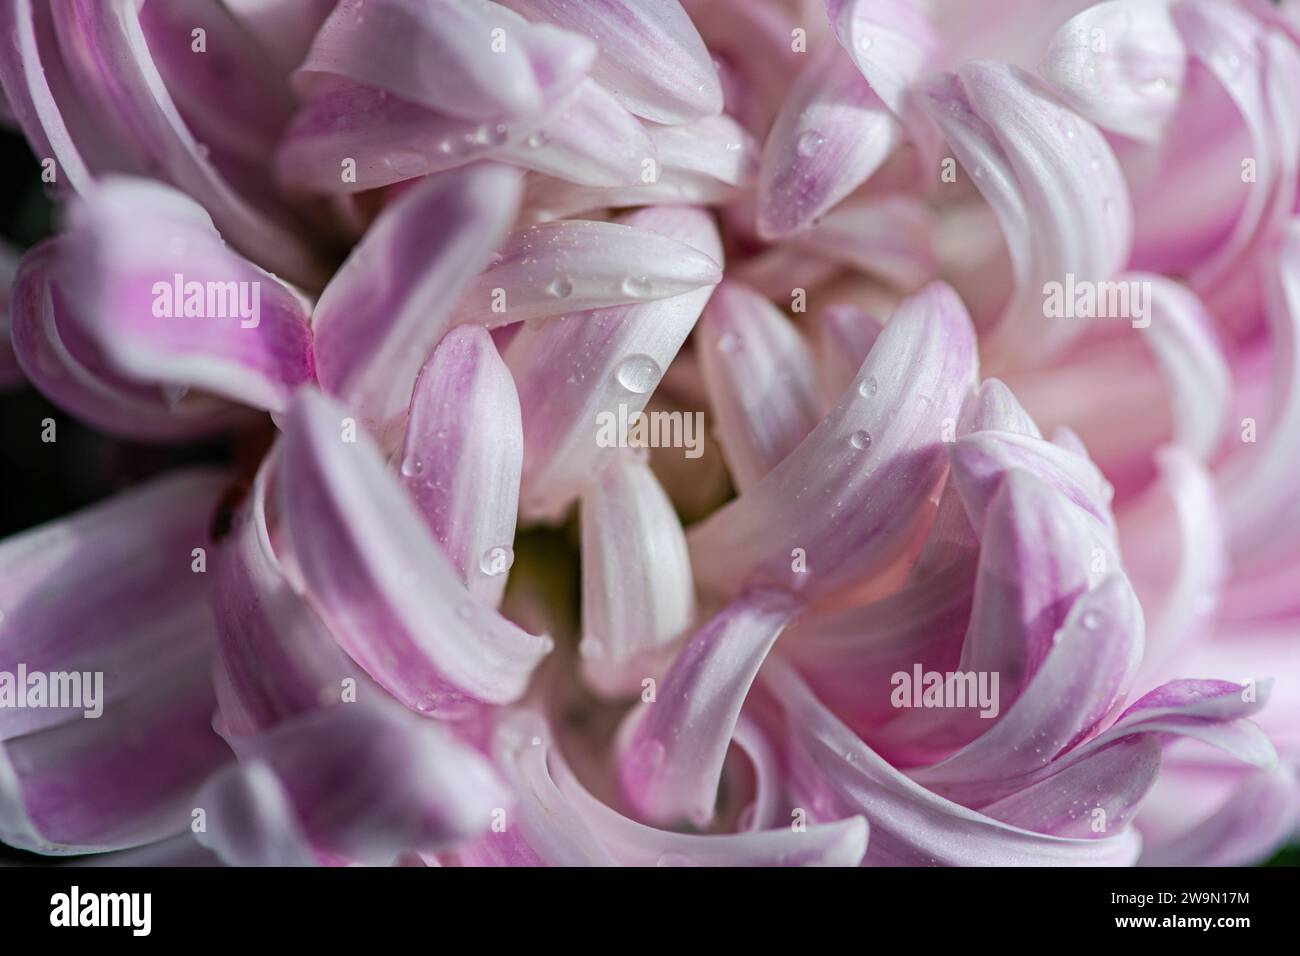 Full frame close-up of pink Chrysanthemum flower petals Stock Photo